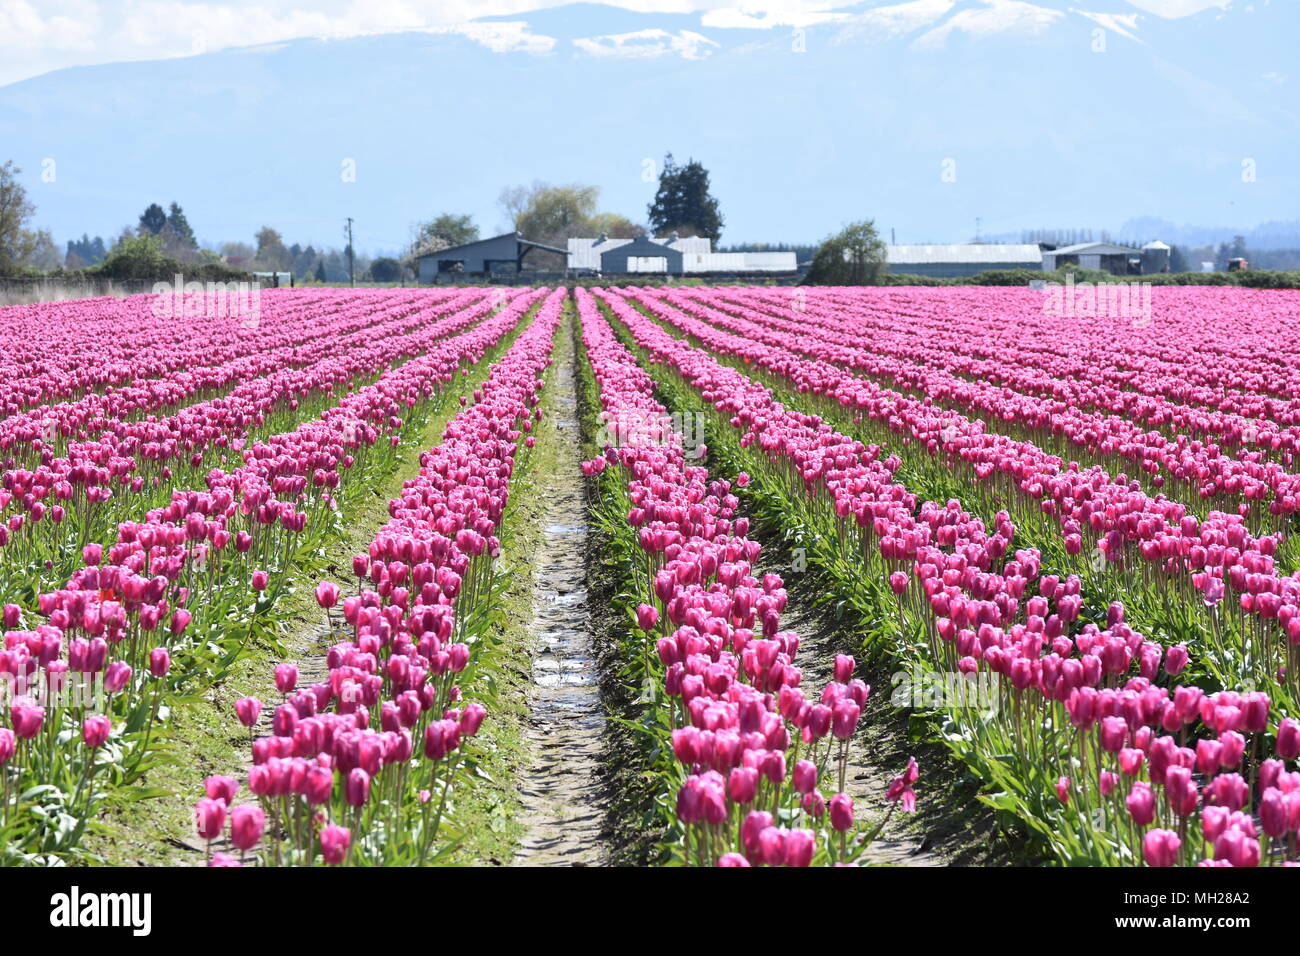 Field of Tulips in bloom Stock Photo